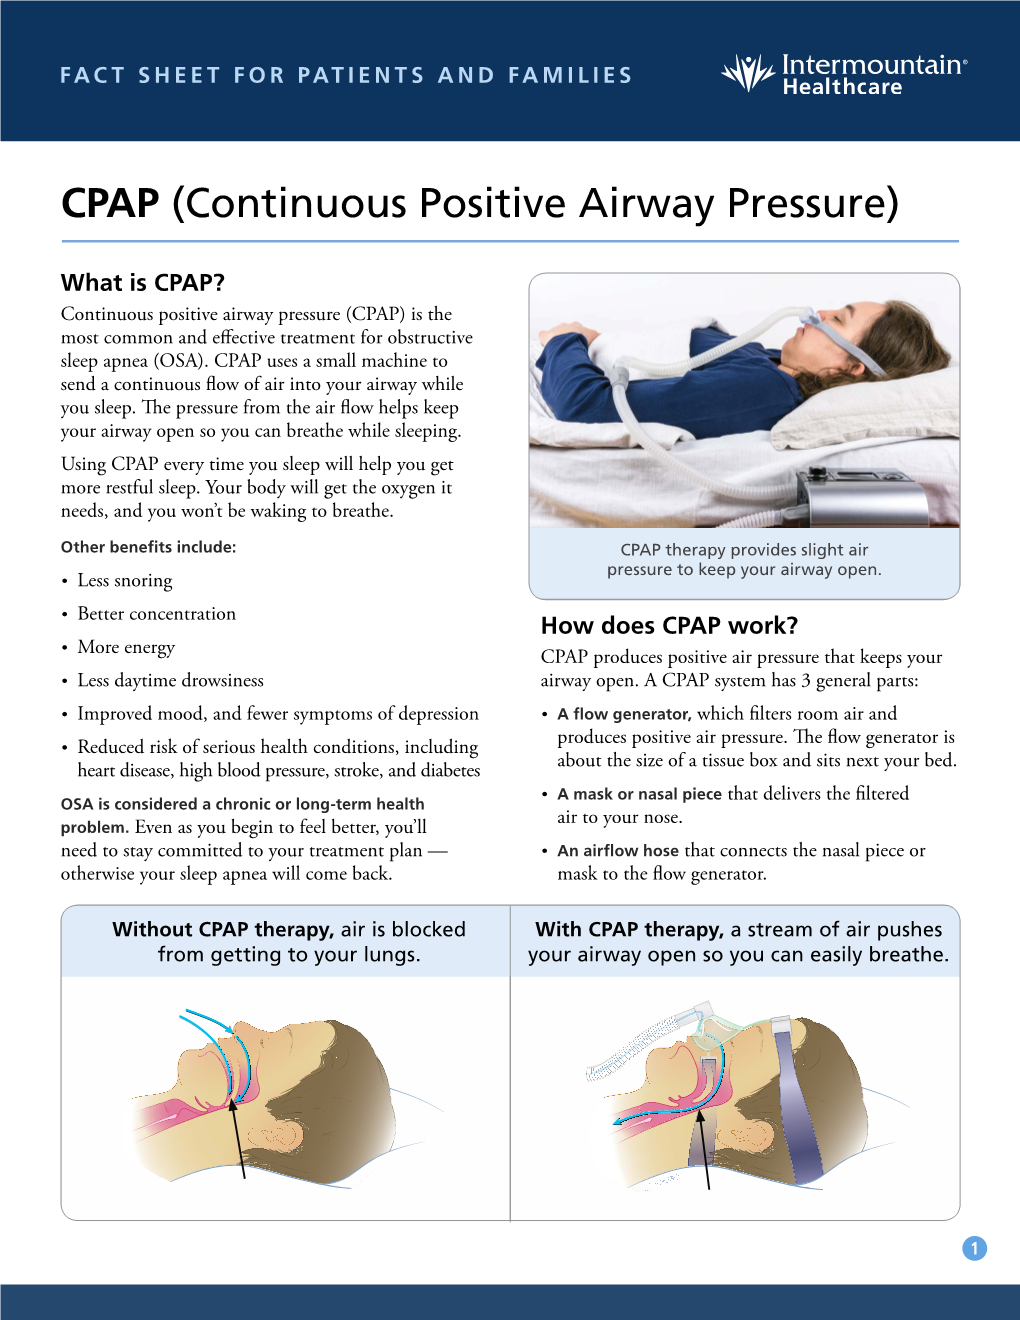 CPAP (Continuous Positive Airway Pressure)